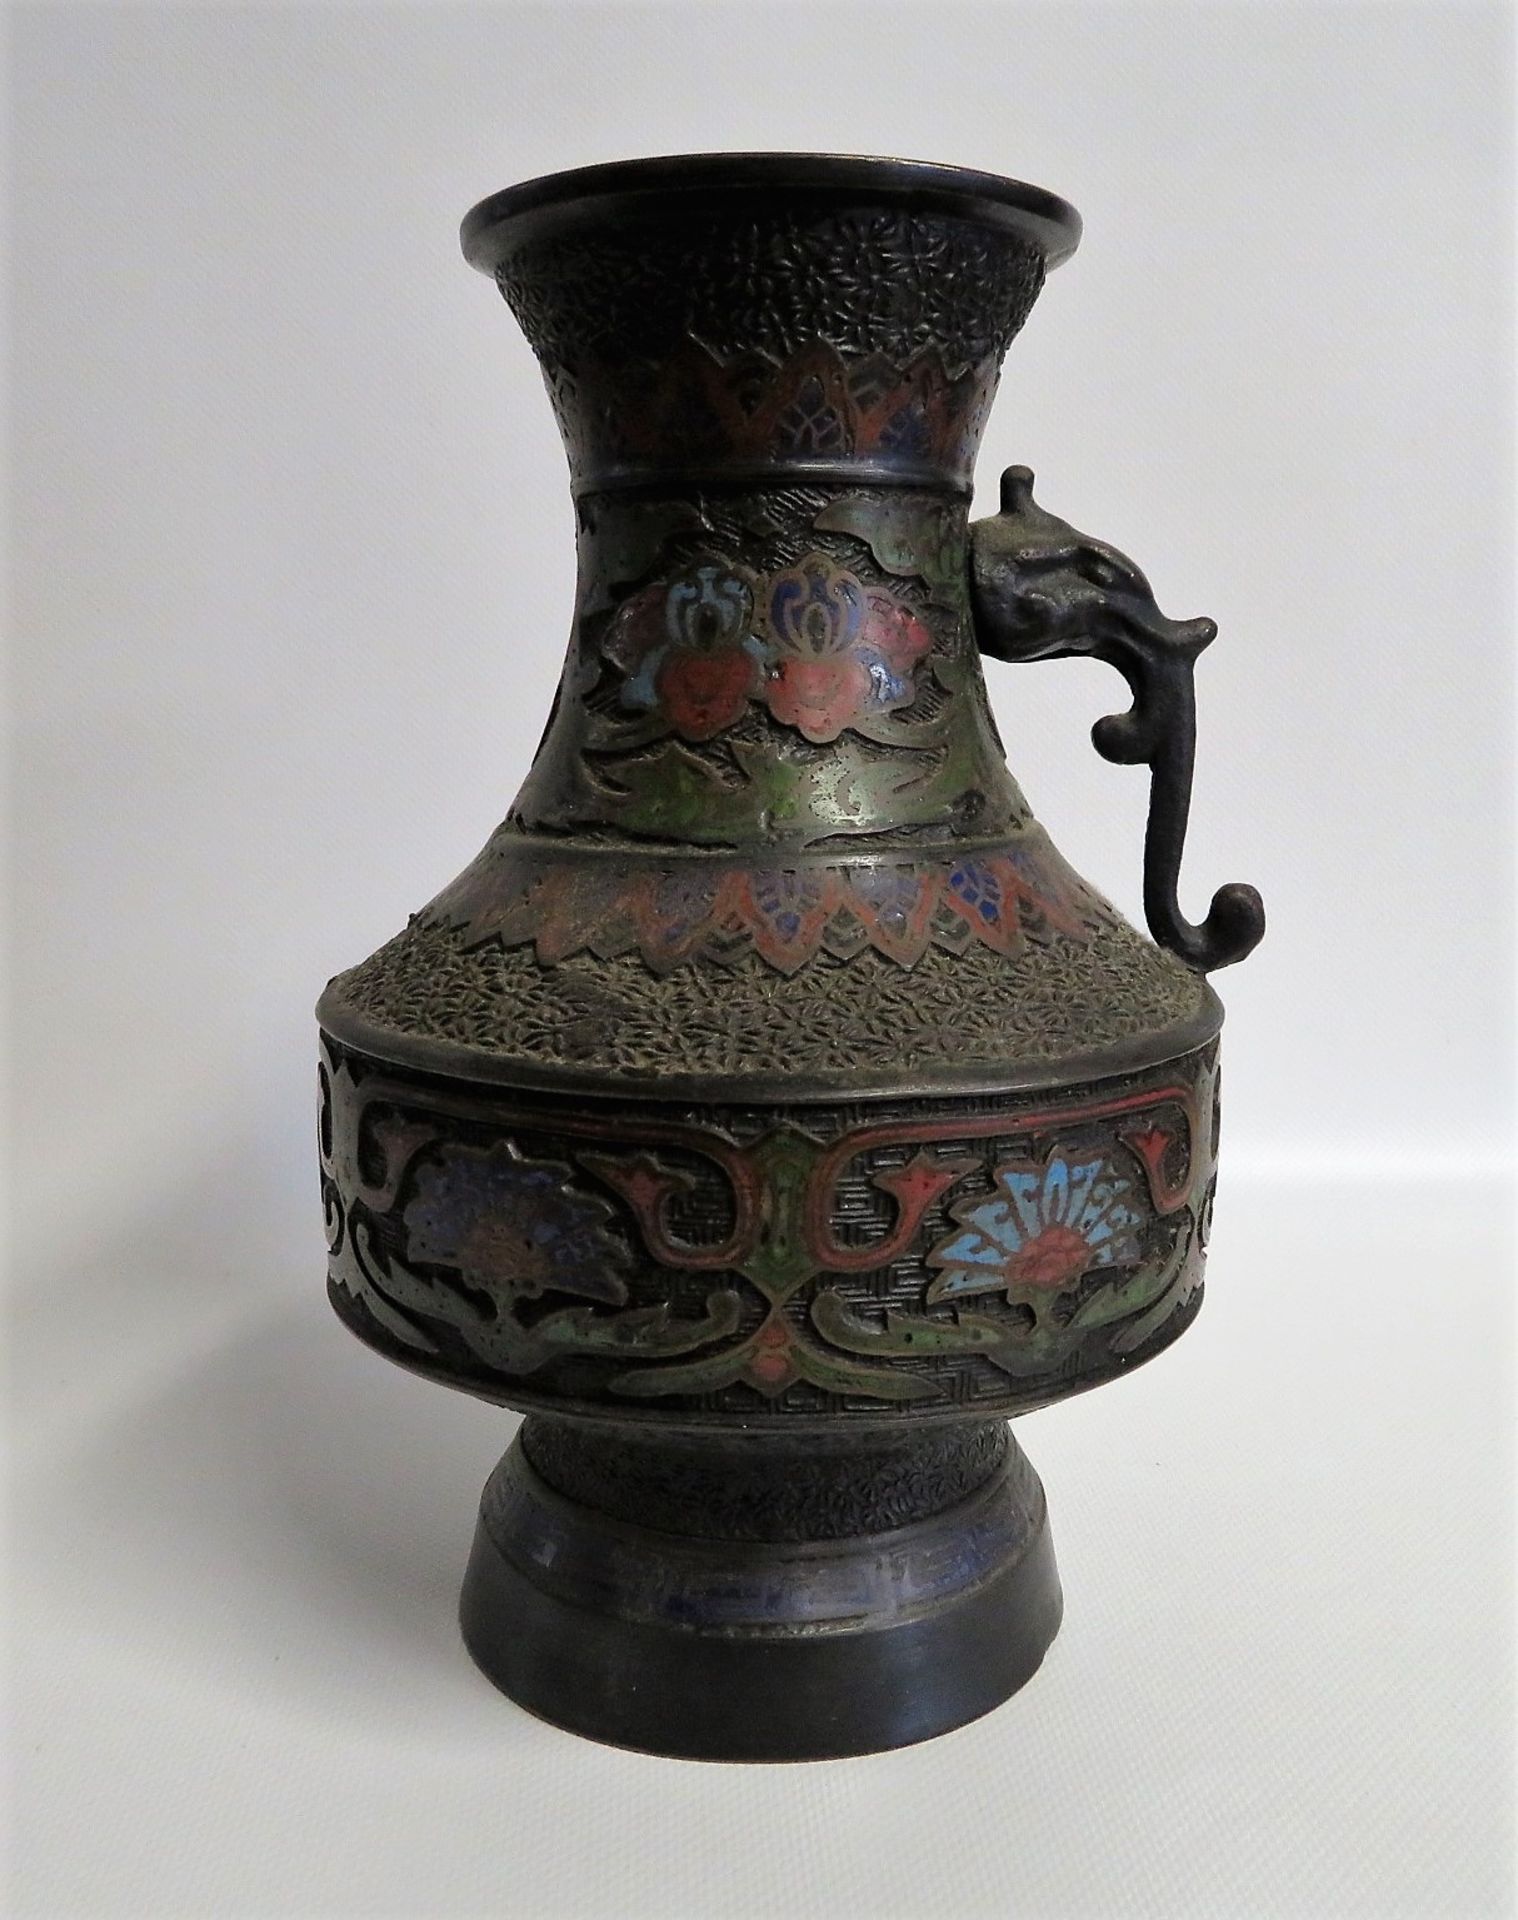 Cloisonné Vase, Japan, Bronze, ein Henkel fehlt, h 24,5 cm, d 17 cm.